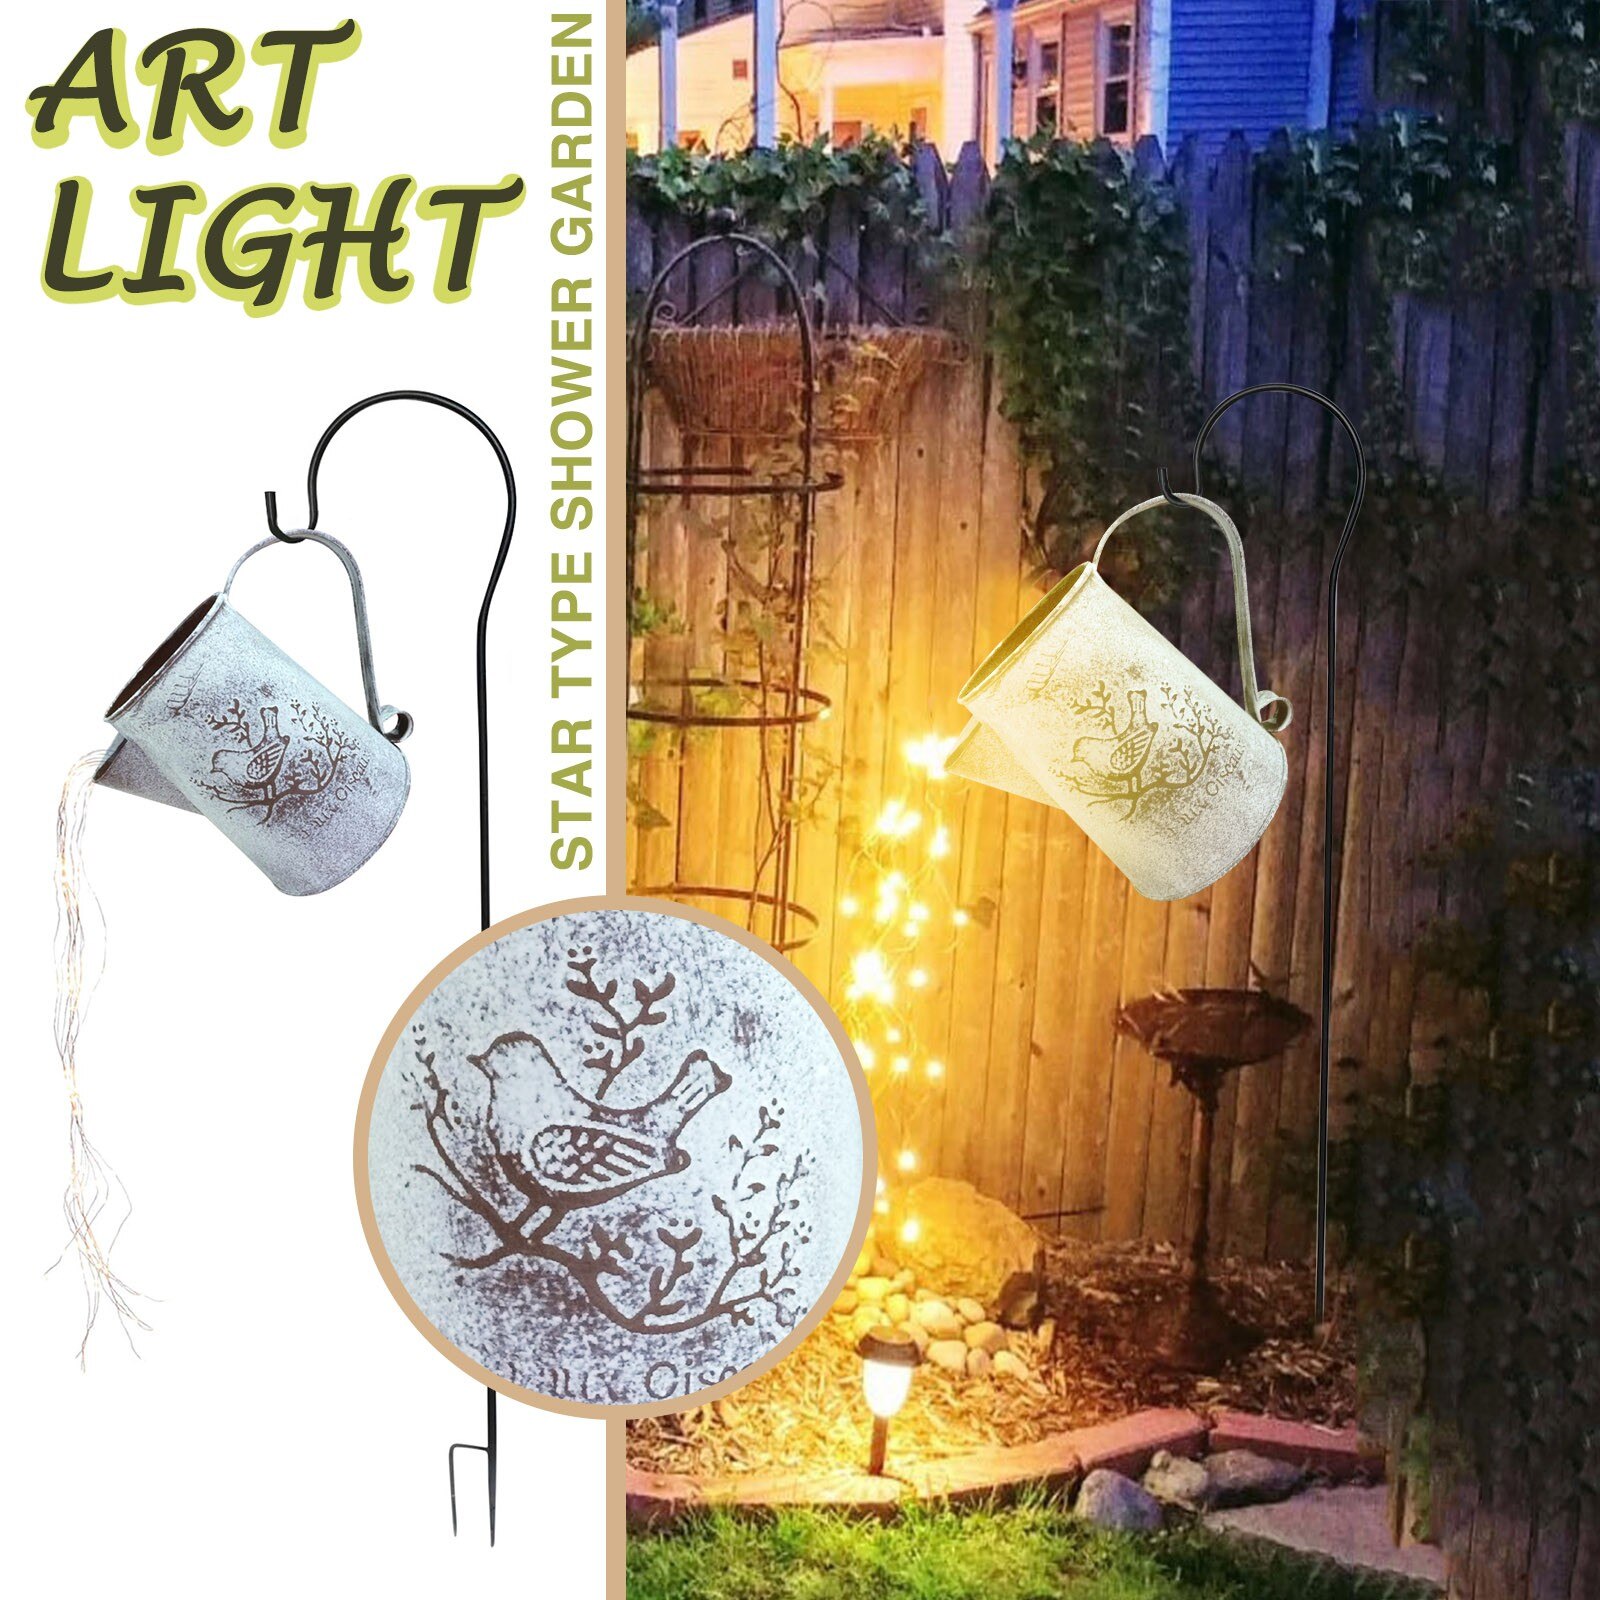 Tuin Decoratie Outdoor Ster Type Douche Art Licht Decoratieve Tuinieren Gazon Lamp Solar Led Home Decoratieve